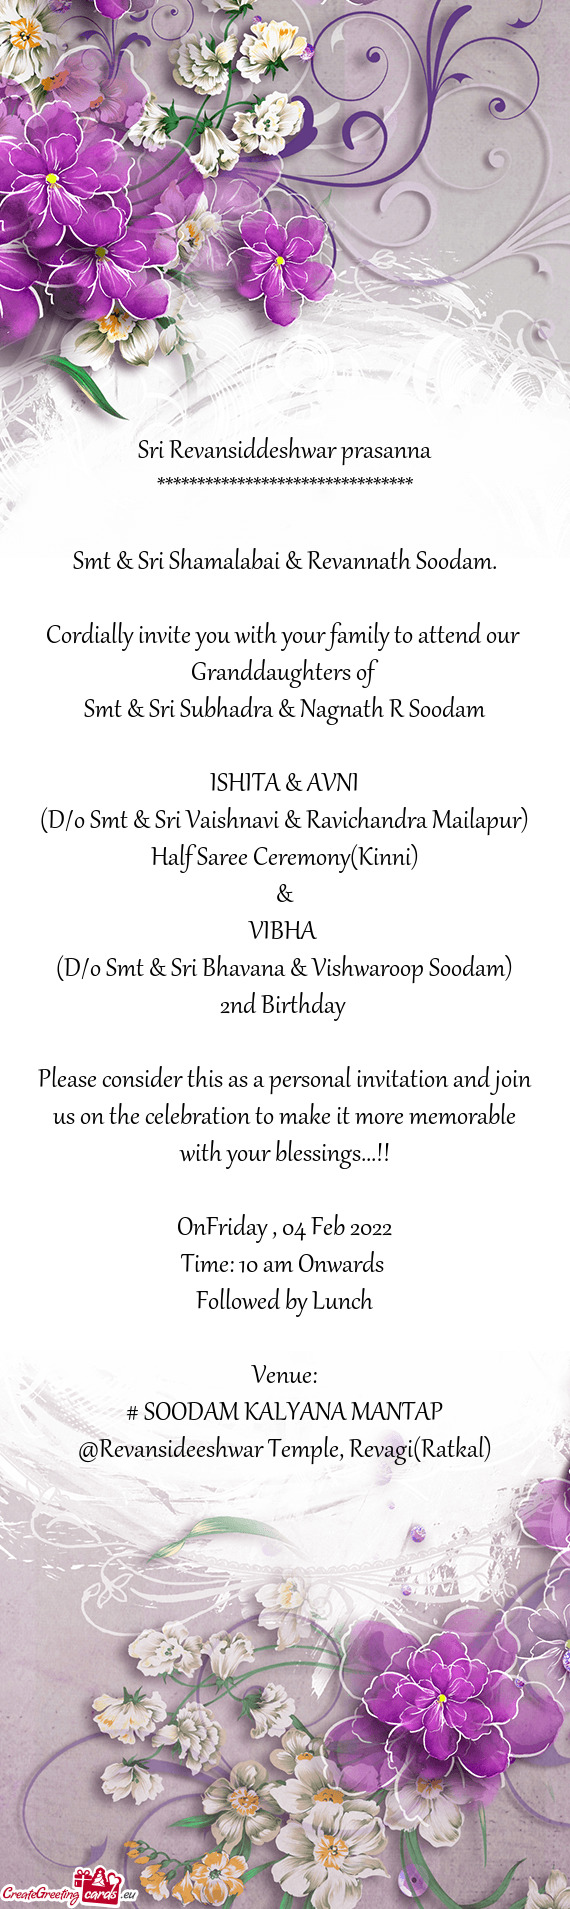 Smt & Sri Subhadra & Nagnath R Soodam